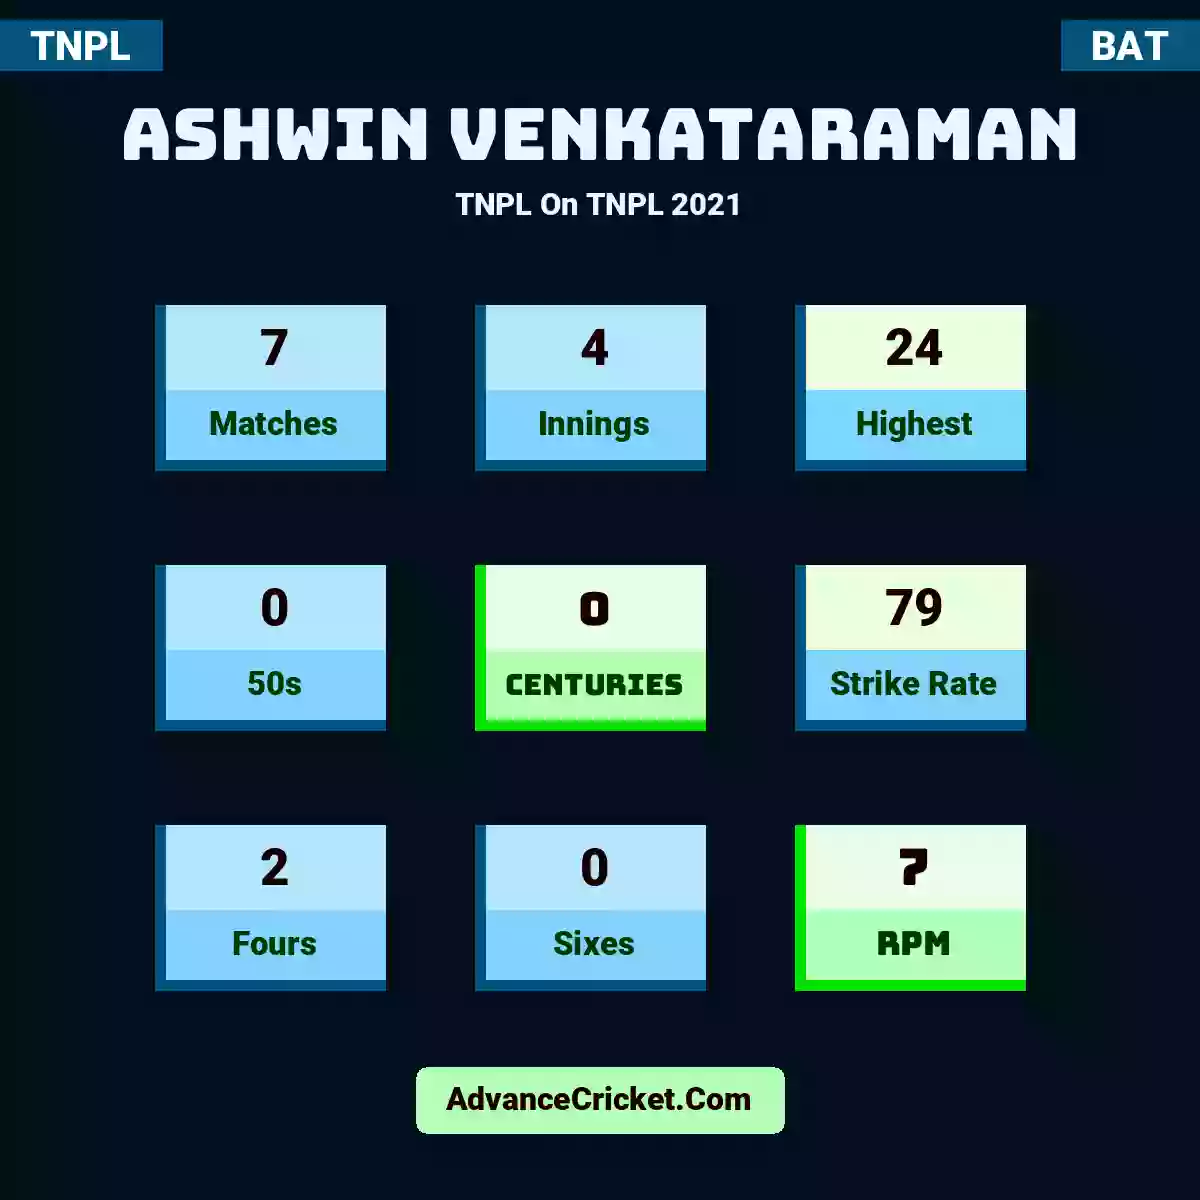 Ashwin Venkataraman TNPL  On TNPL 2021, Ashwin Venkataraman played 7 matches, scored 24 runs as highest, 0 half-centuries, and 0 centuries, with a strike rate of 79. A.Venkataraman hit 2 fours and 0 sixes, with an RPM of 7.